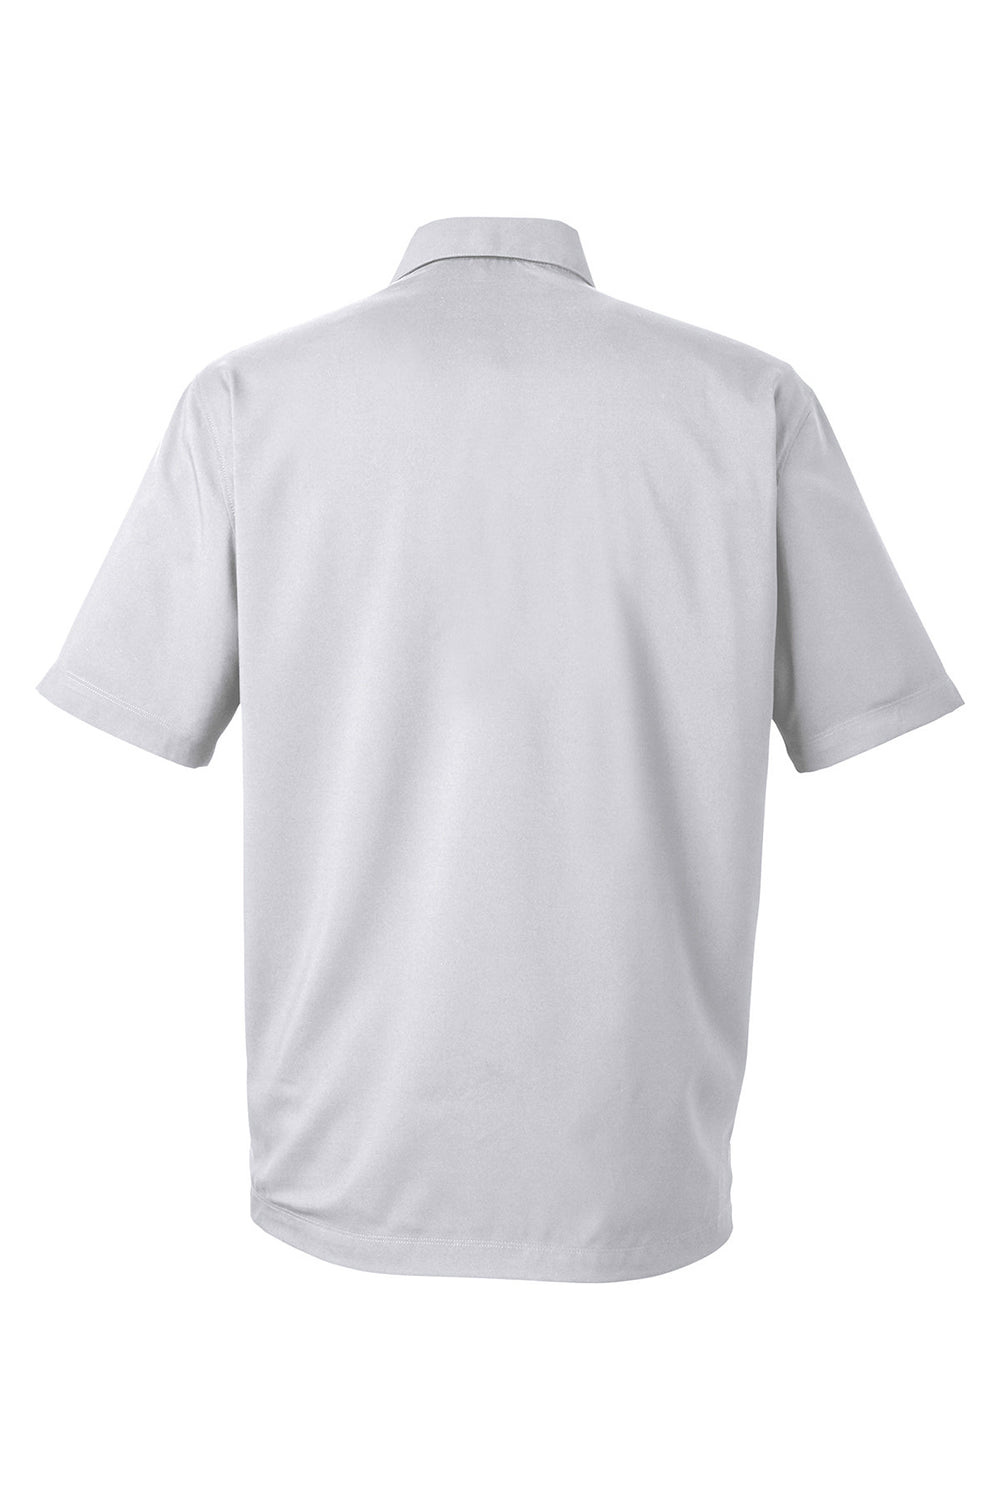 Under Armour 1351360 Mens Motivate Moisture Wicking Short Sleeve Button Down Shirt w/ Pocket Halo Grey Flat Back